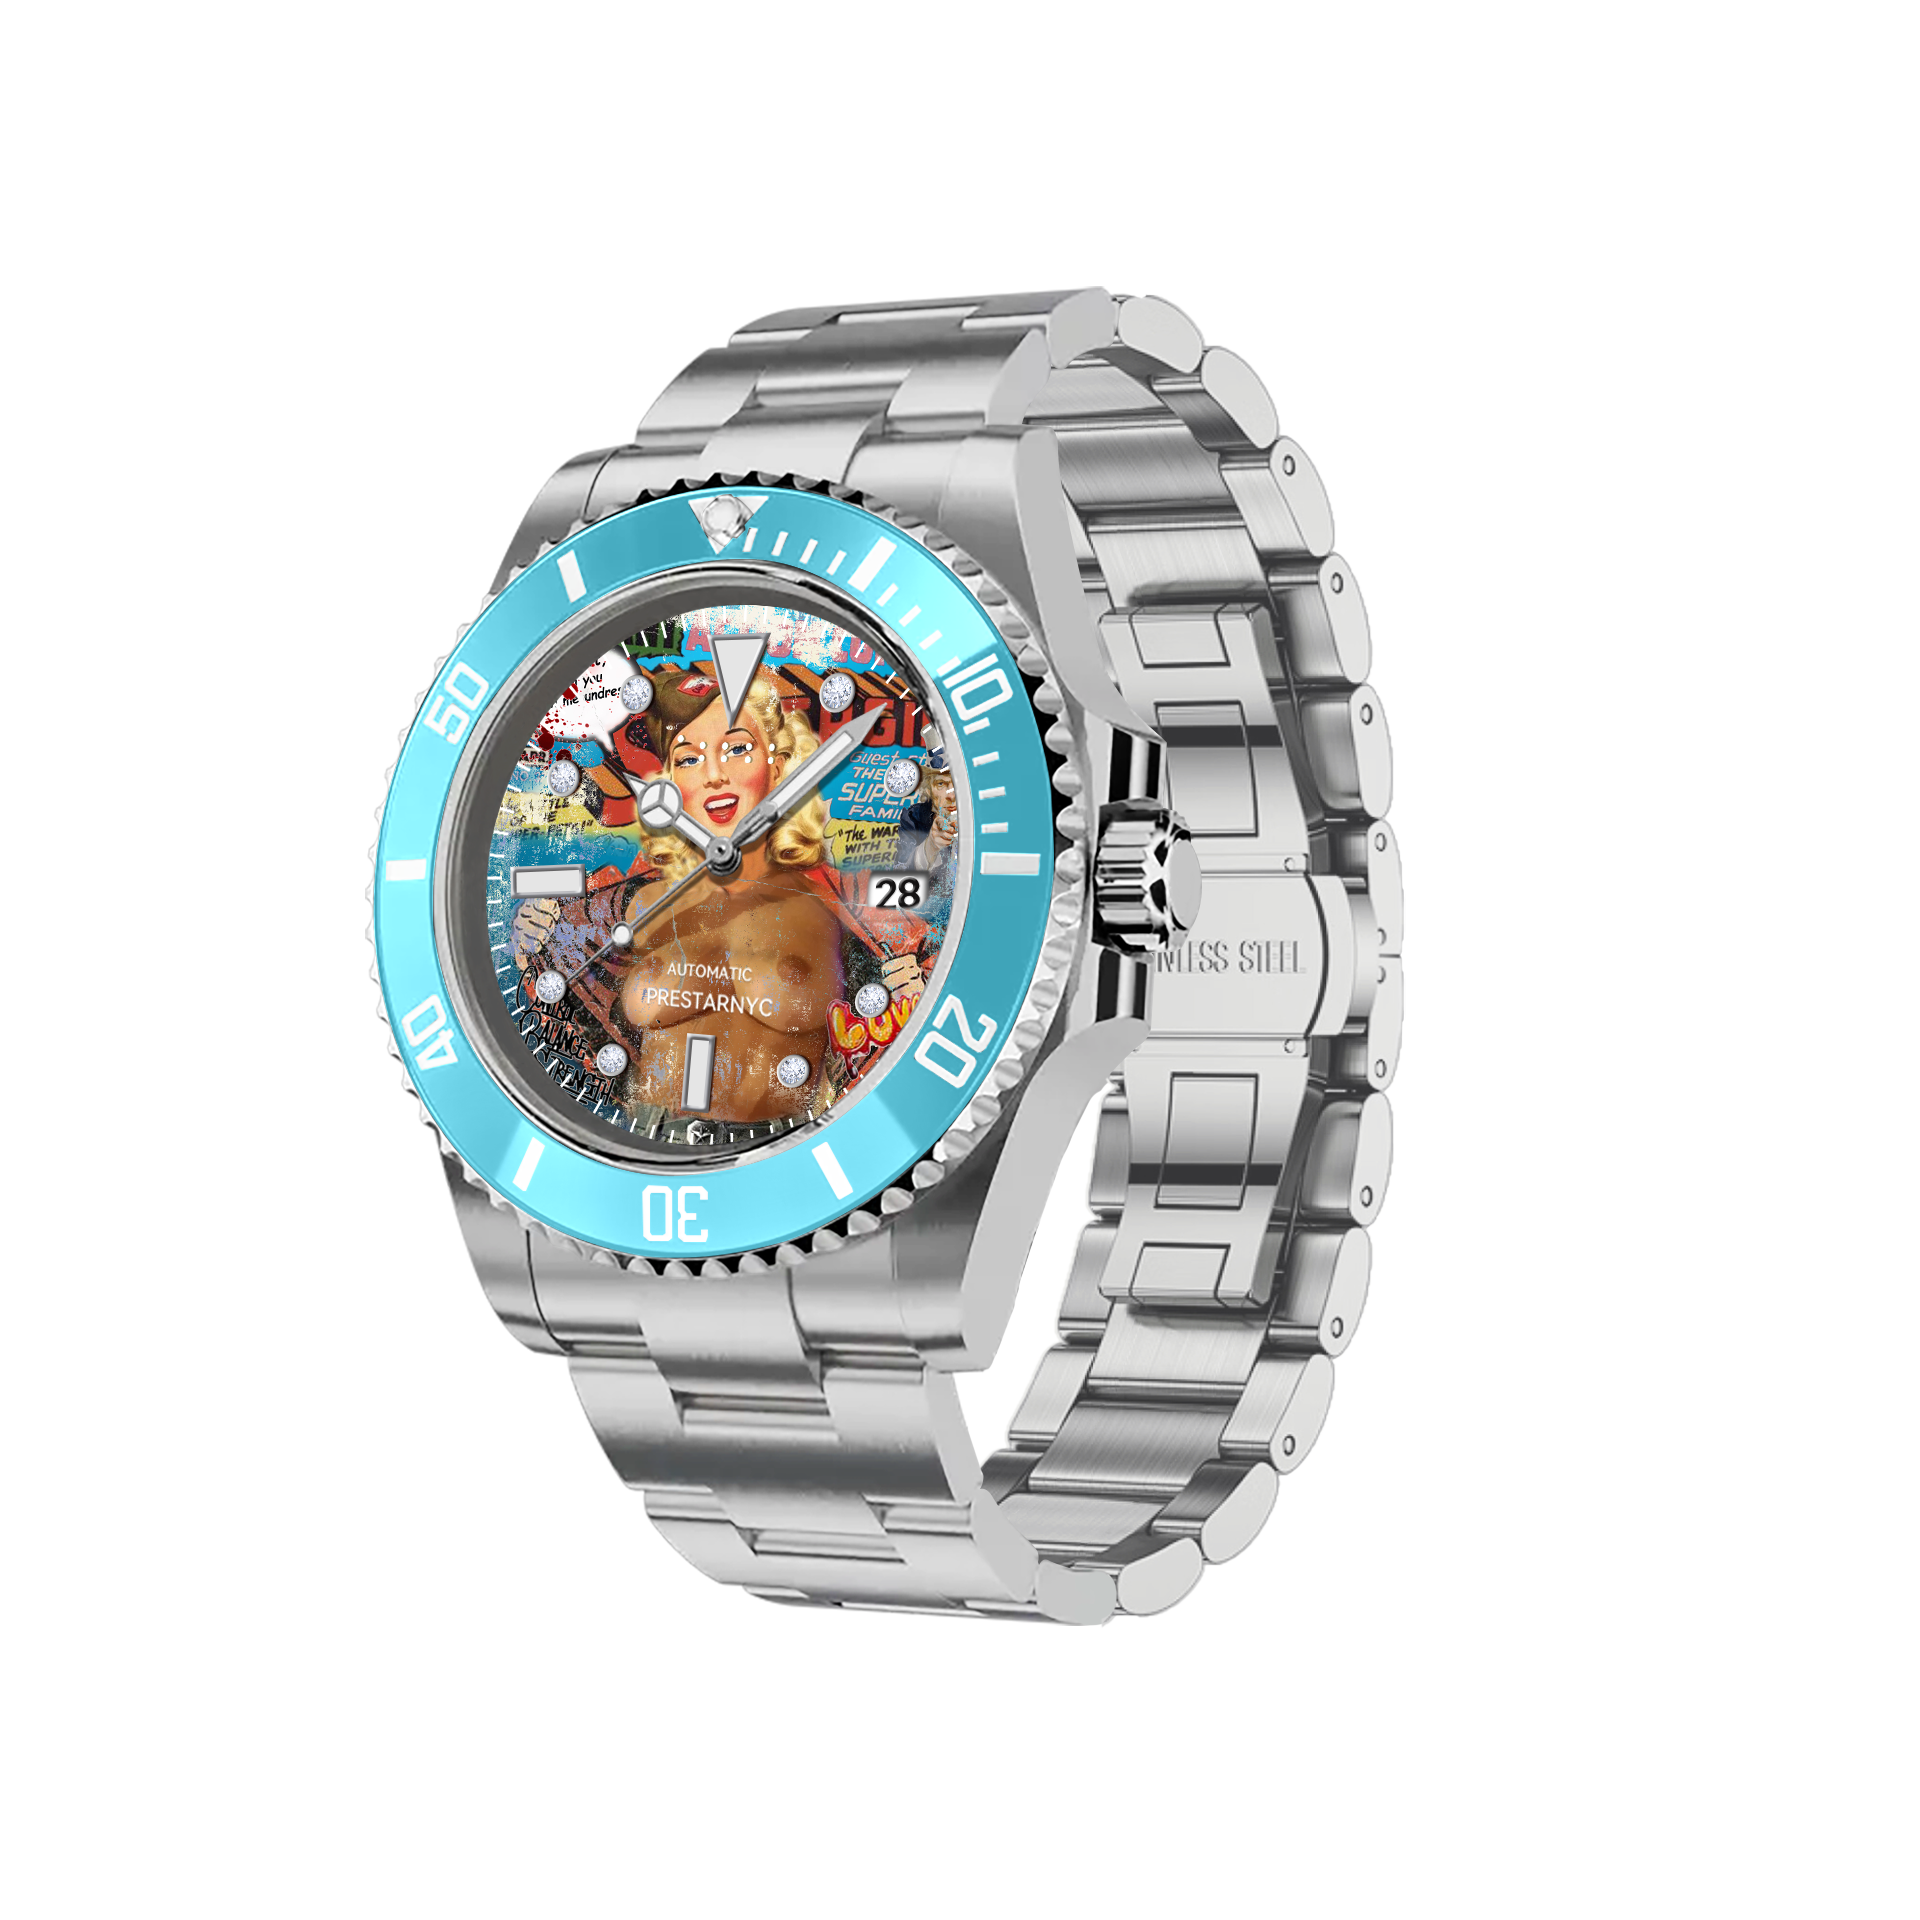 Prestar NYC Aquaman Initial Mechanical Watch (Blonde Charm)